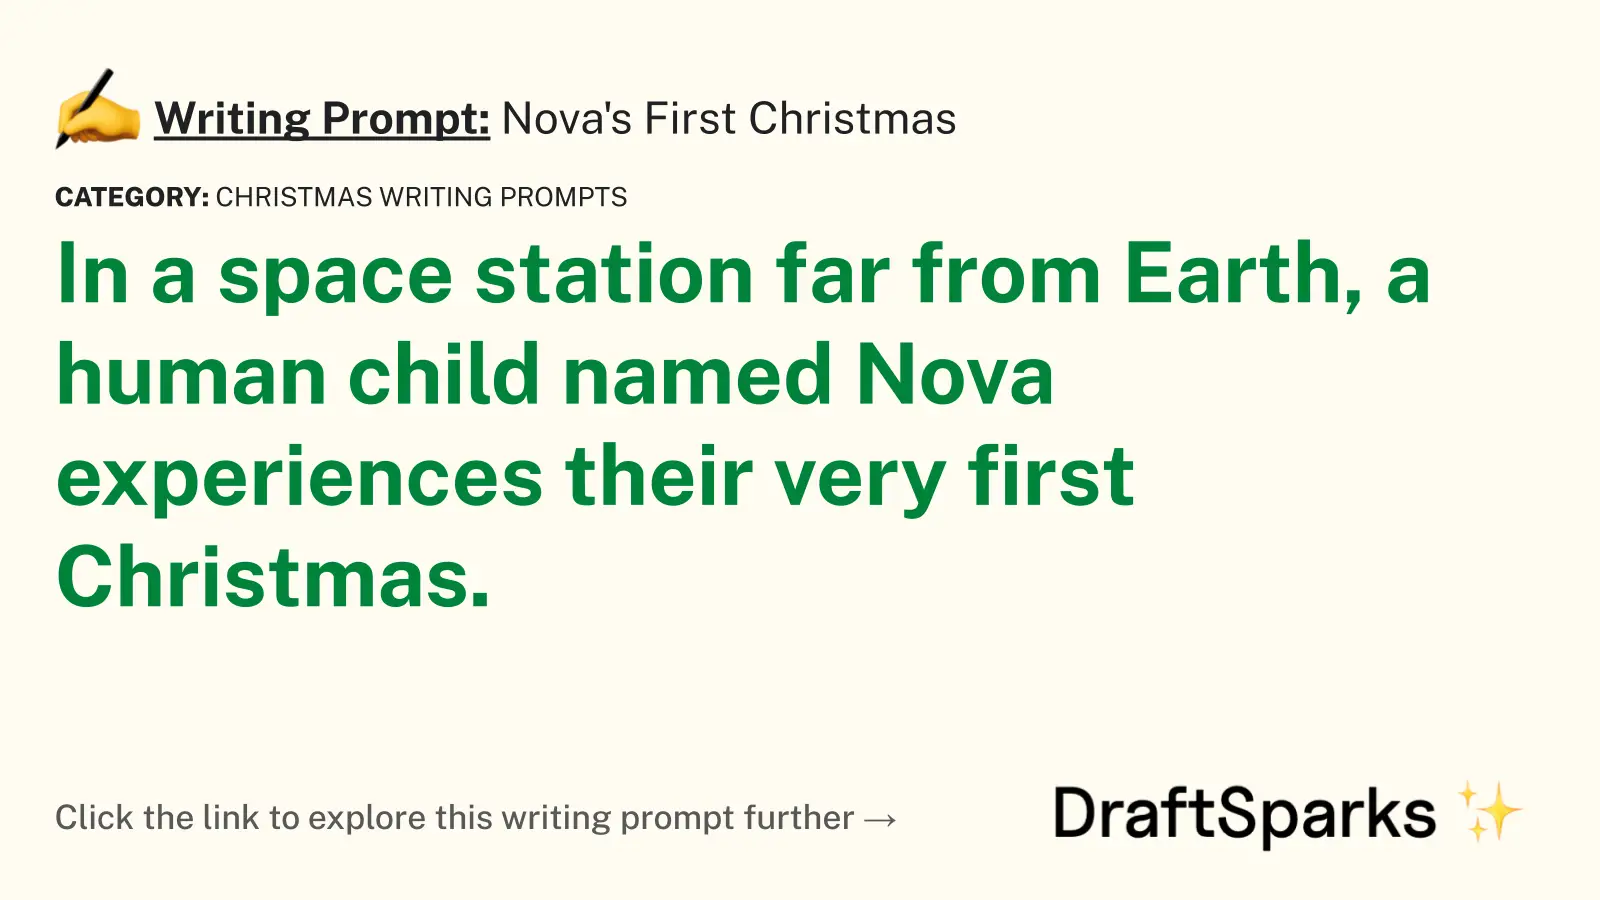 Nova’s First Christmas